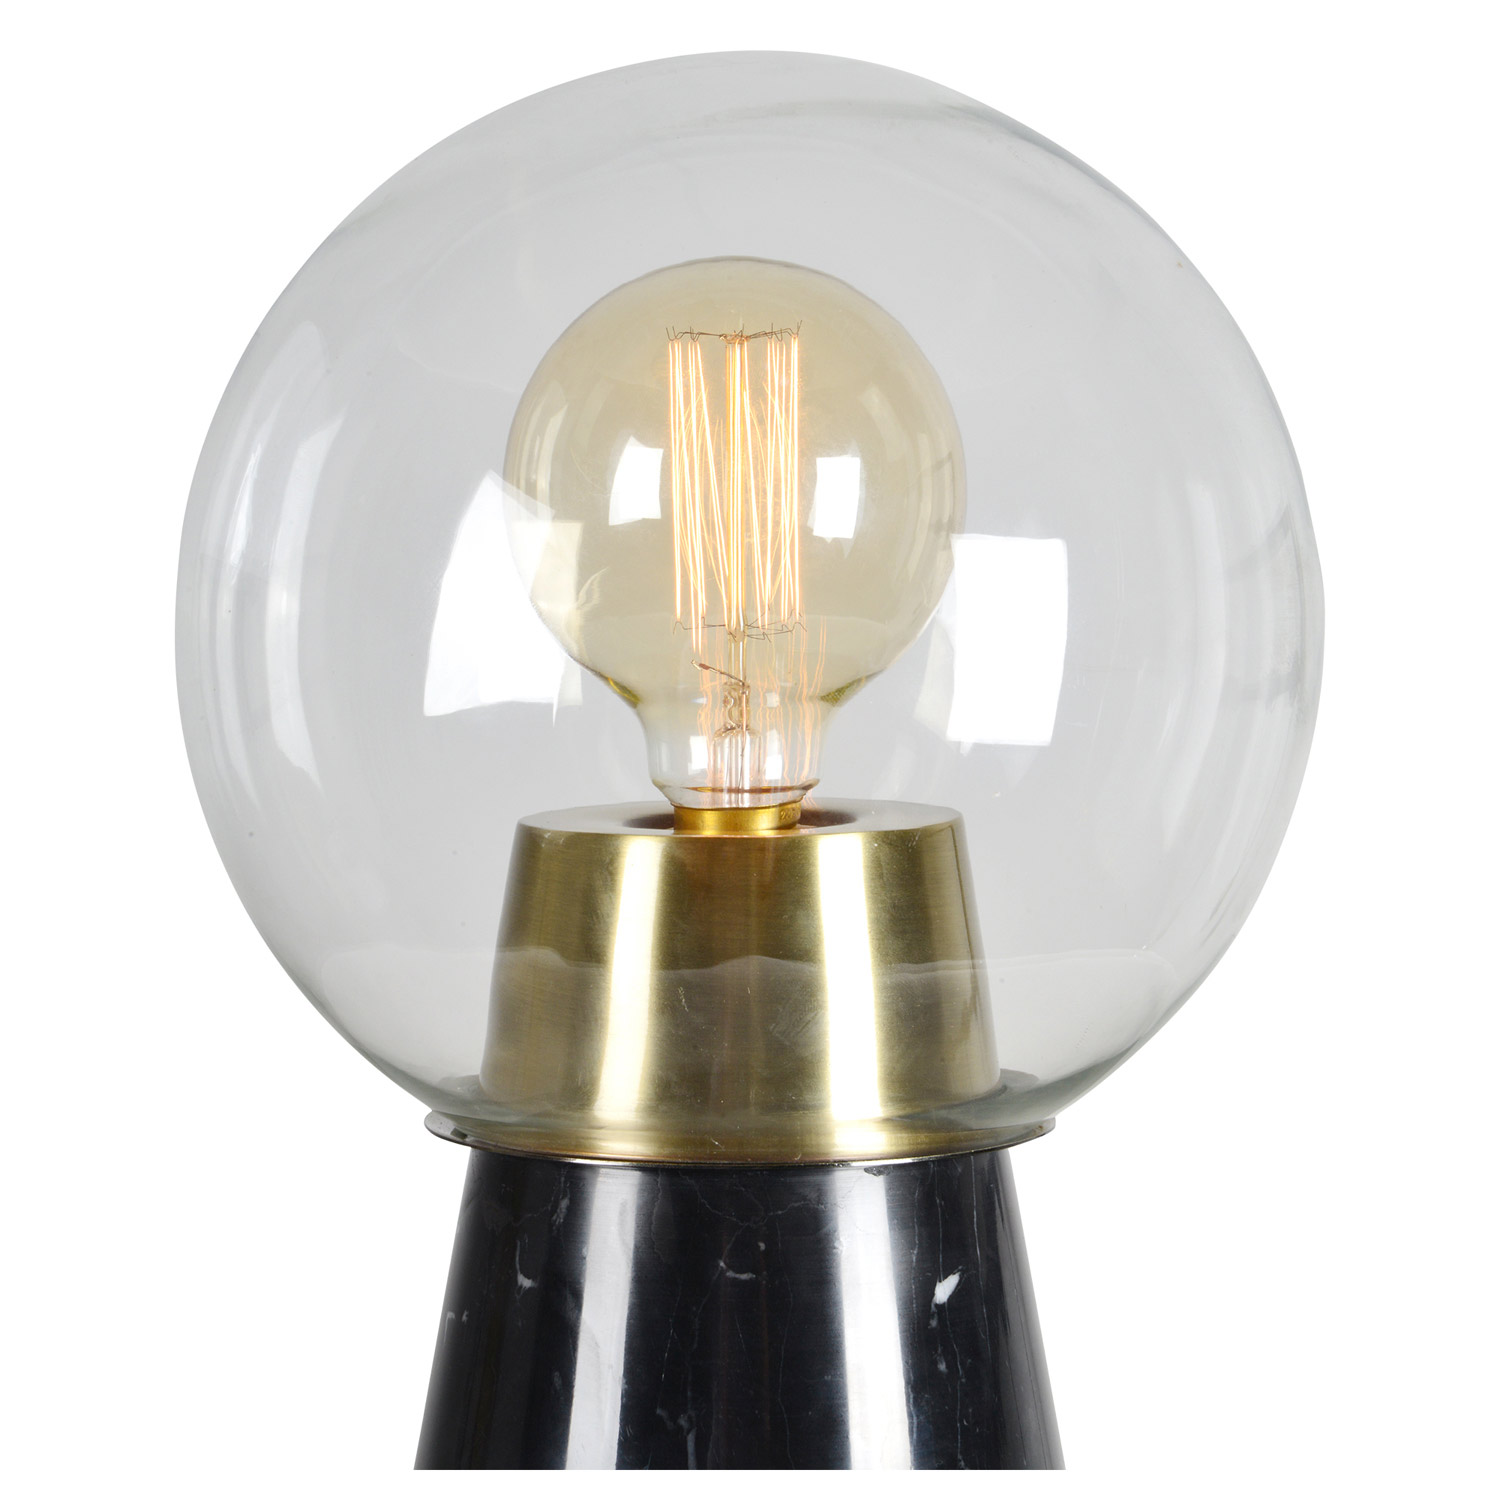 Ren-Wil Oswald Table Lamp - Antique Brass/Black